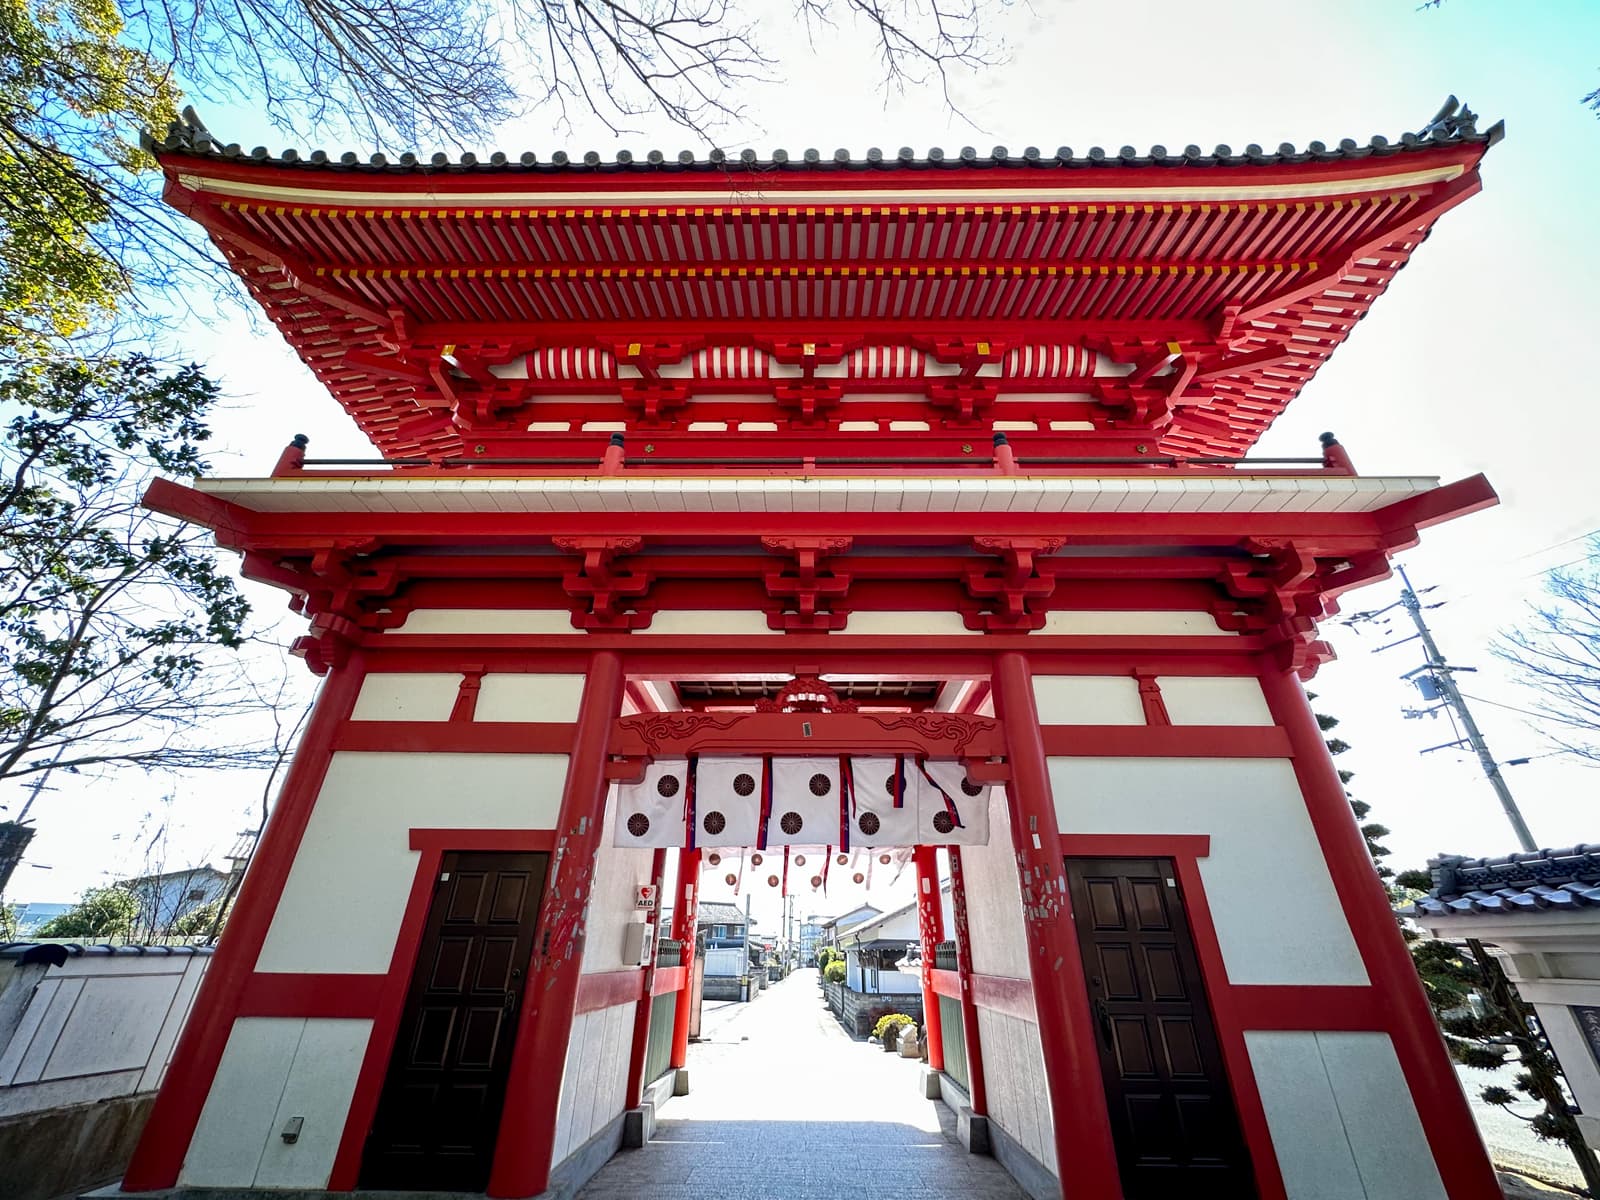 Back of the main gate of Konsenji, temple 3 of the Shikoku Pilgrimage.